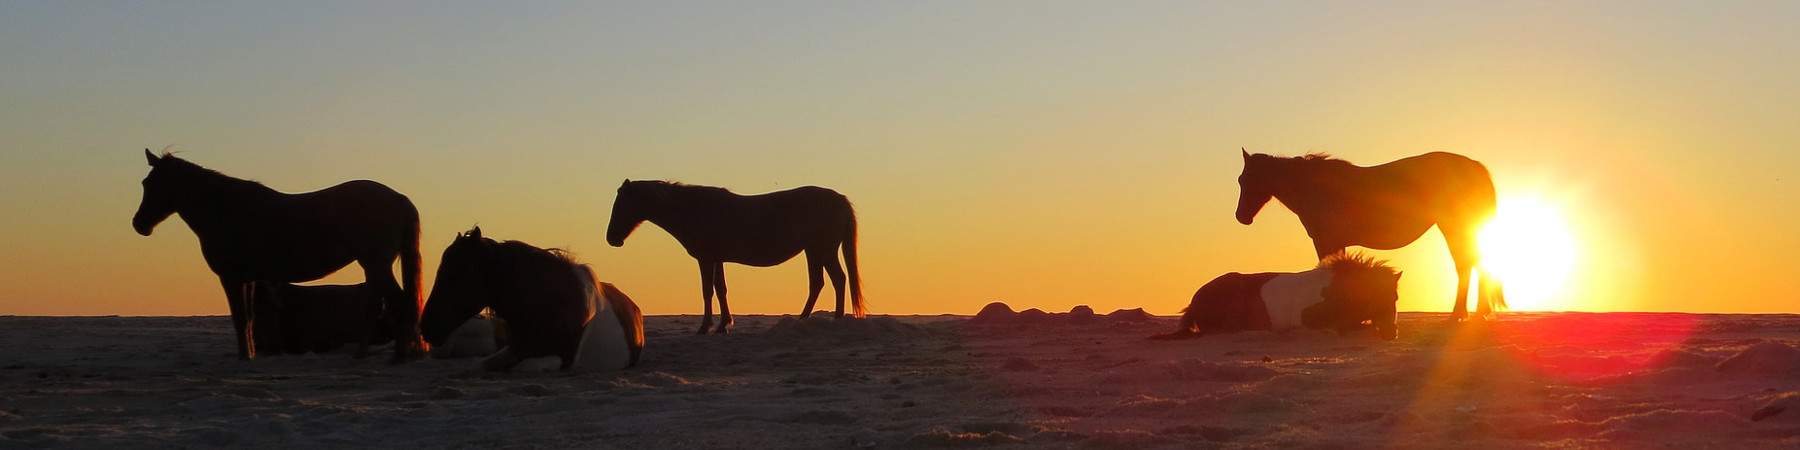 An Assateague Island RV Trips Brings Horsepower to Your Life